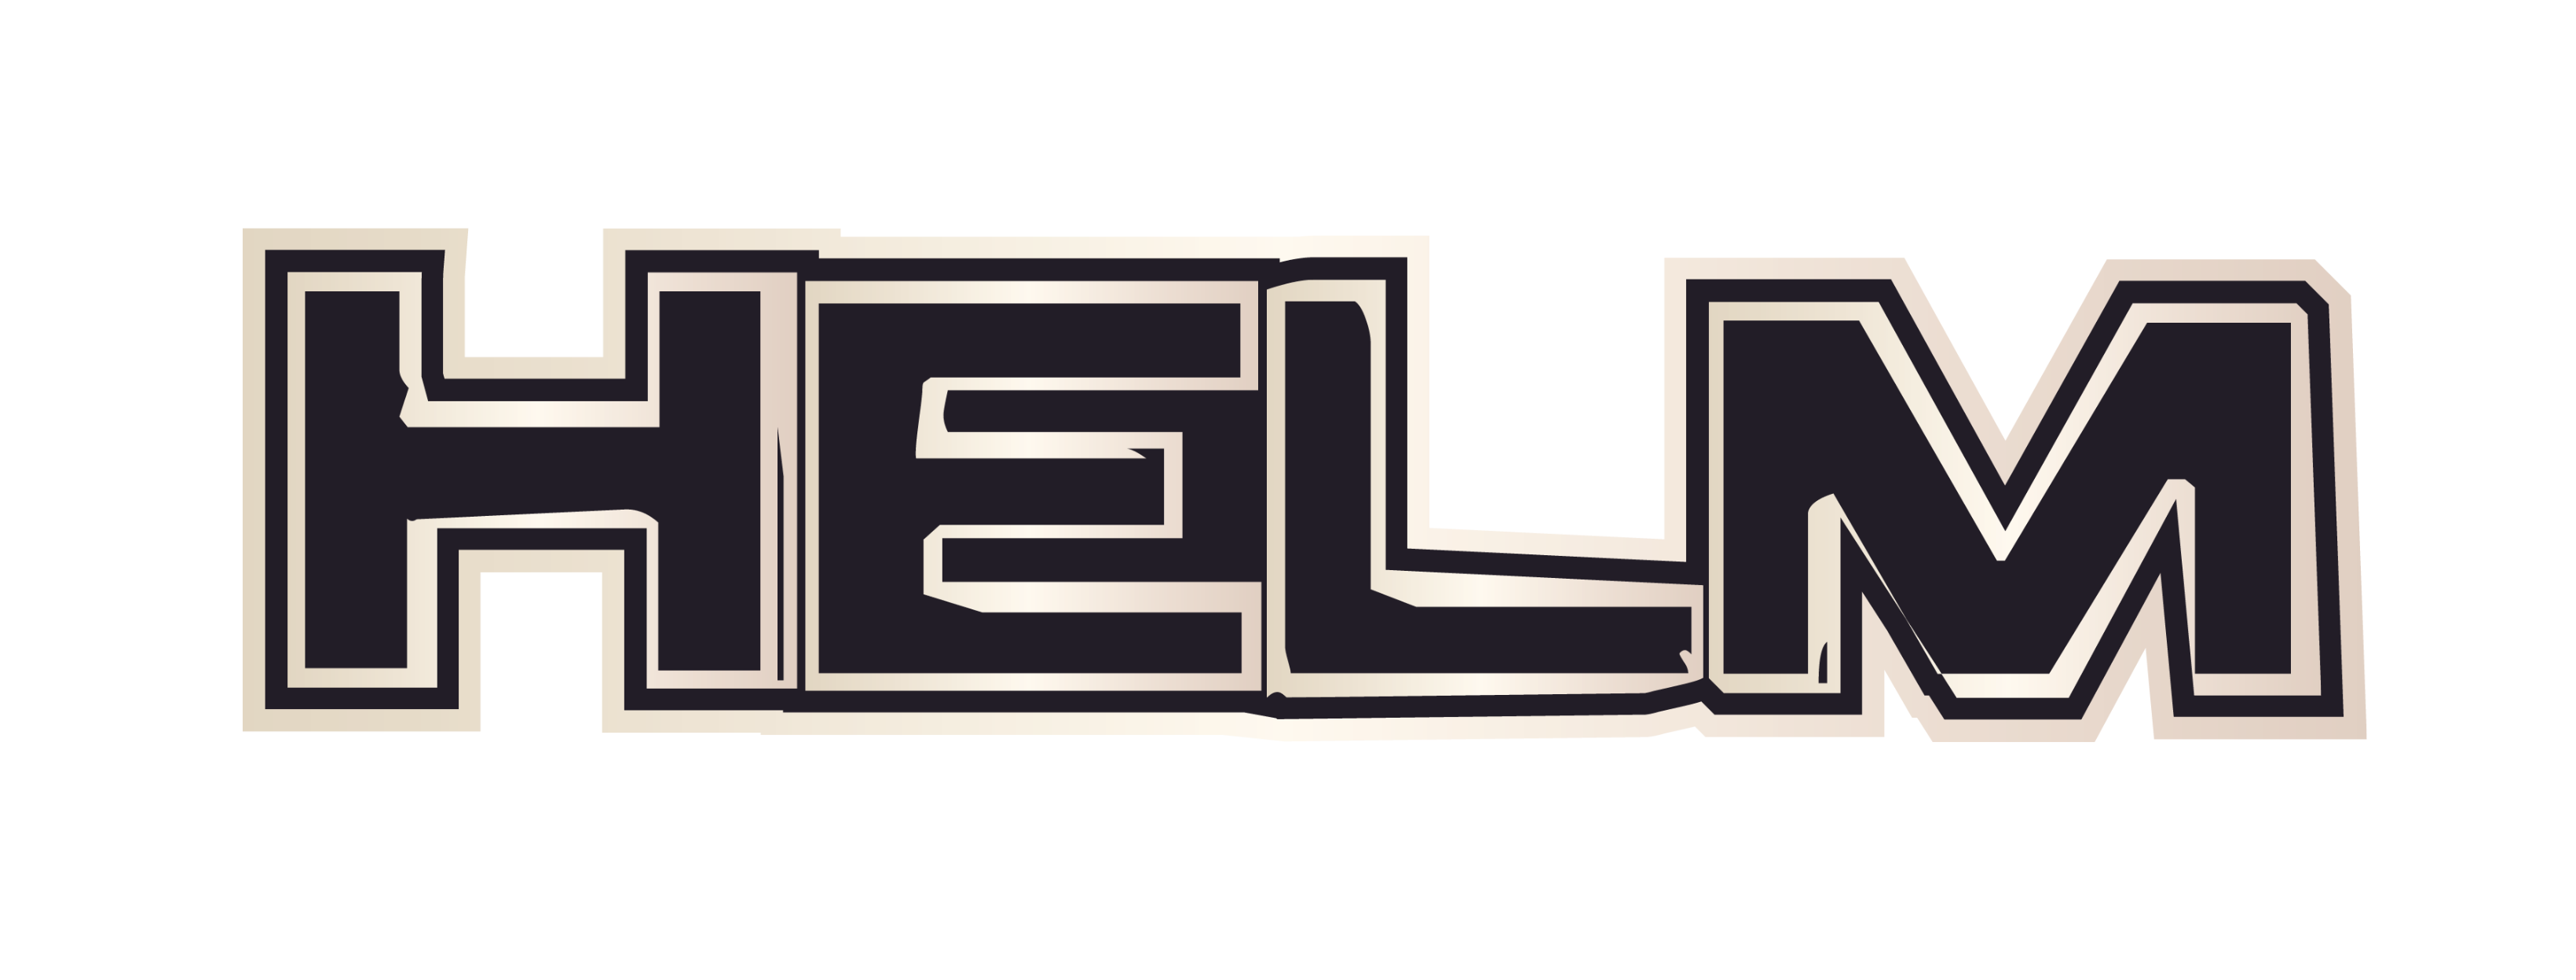 HELM Logo